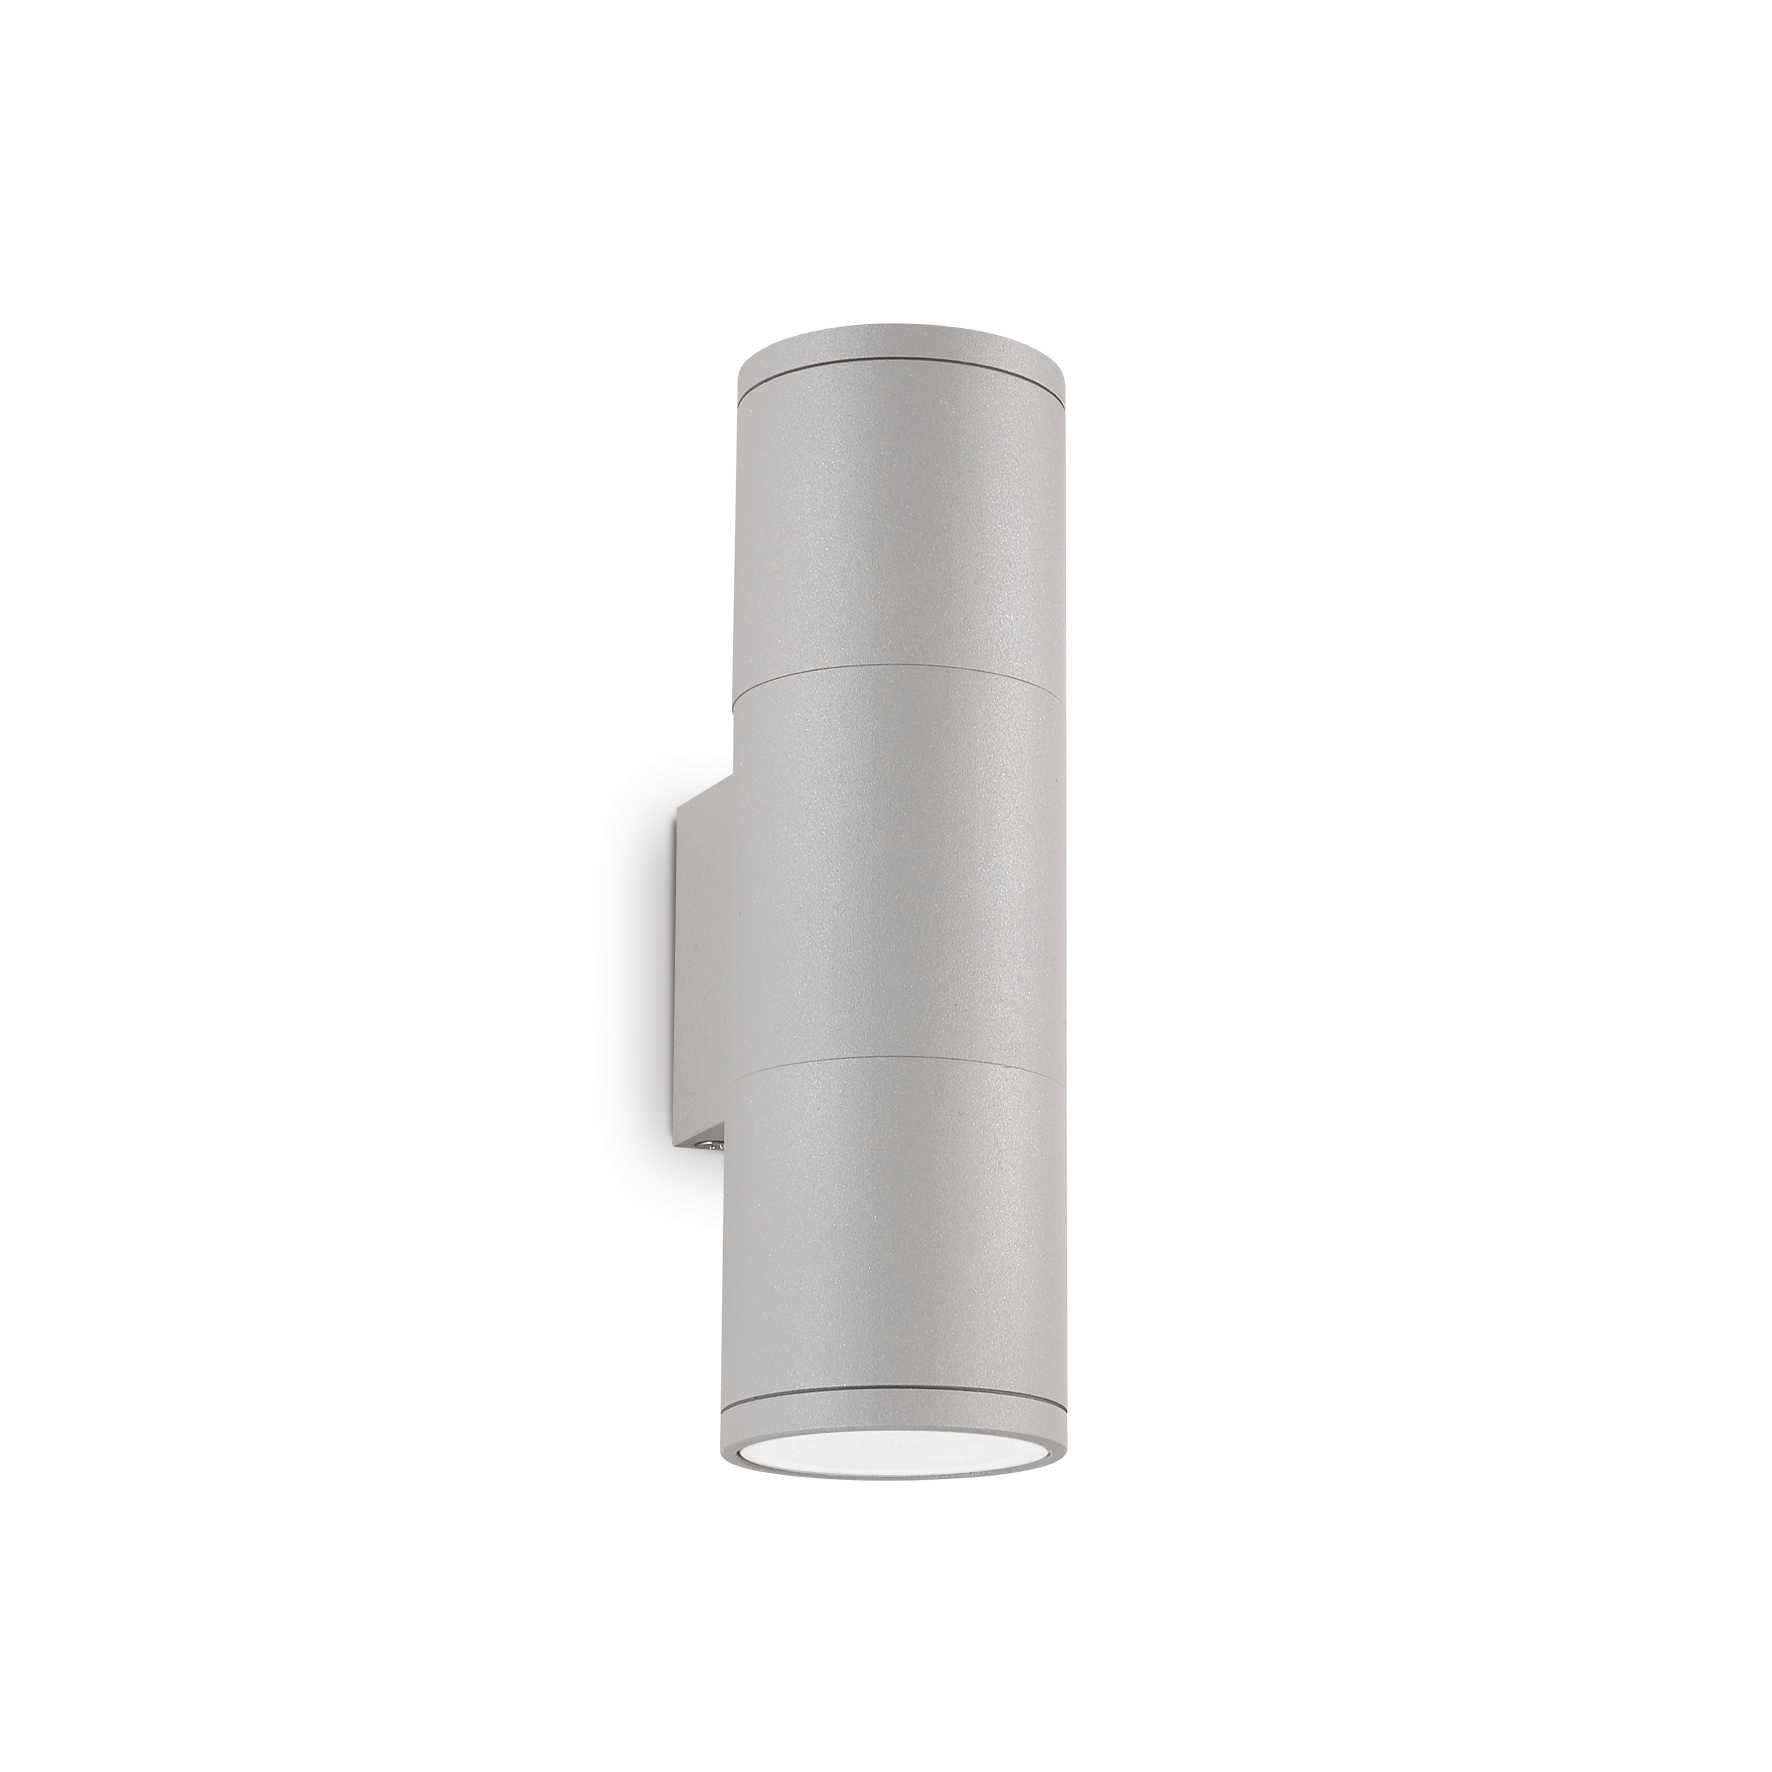 AD hotelska oprema Vanjska zidna lampa Gun ap2 mala- Sive boje slika proizvoda